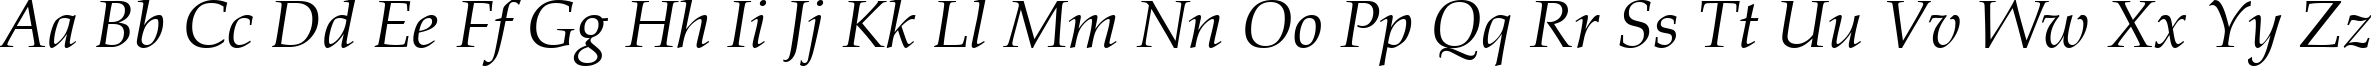 Пример написания английского алфавита шрифтом Book Antiqua Italic